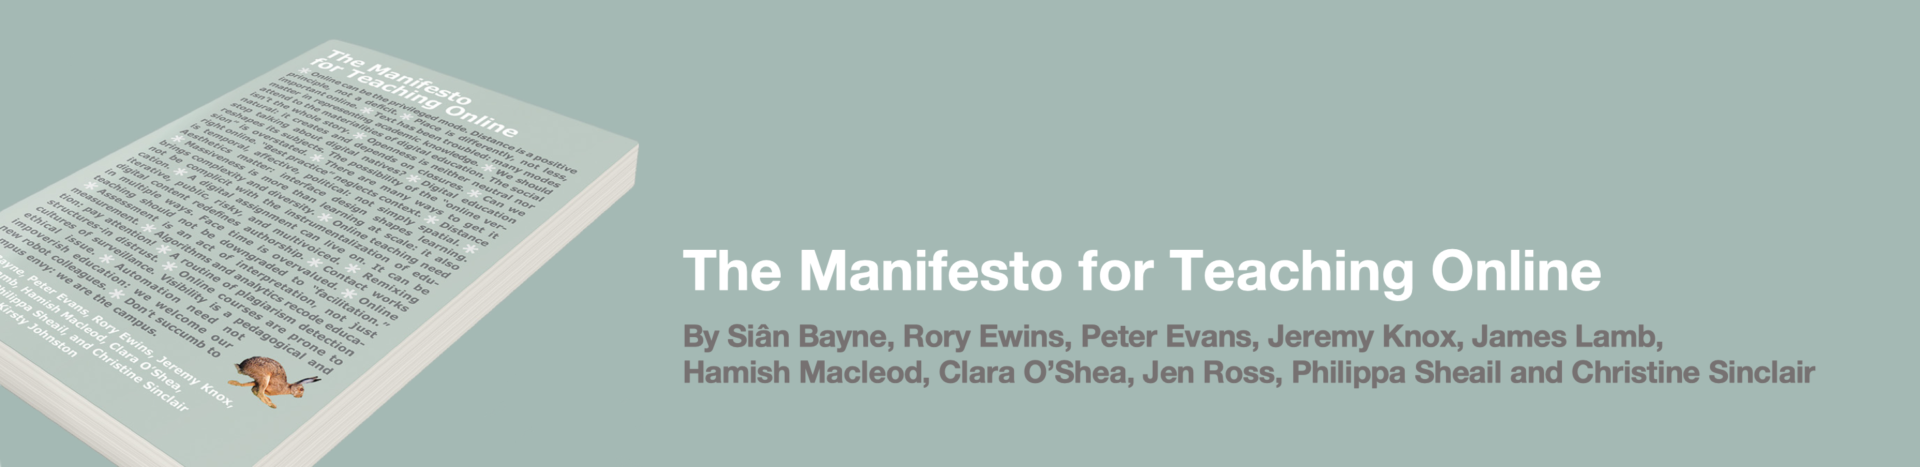 Manifesto book publication update